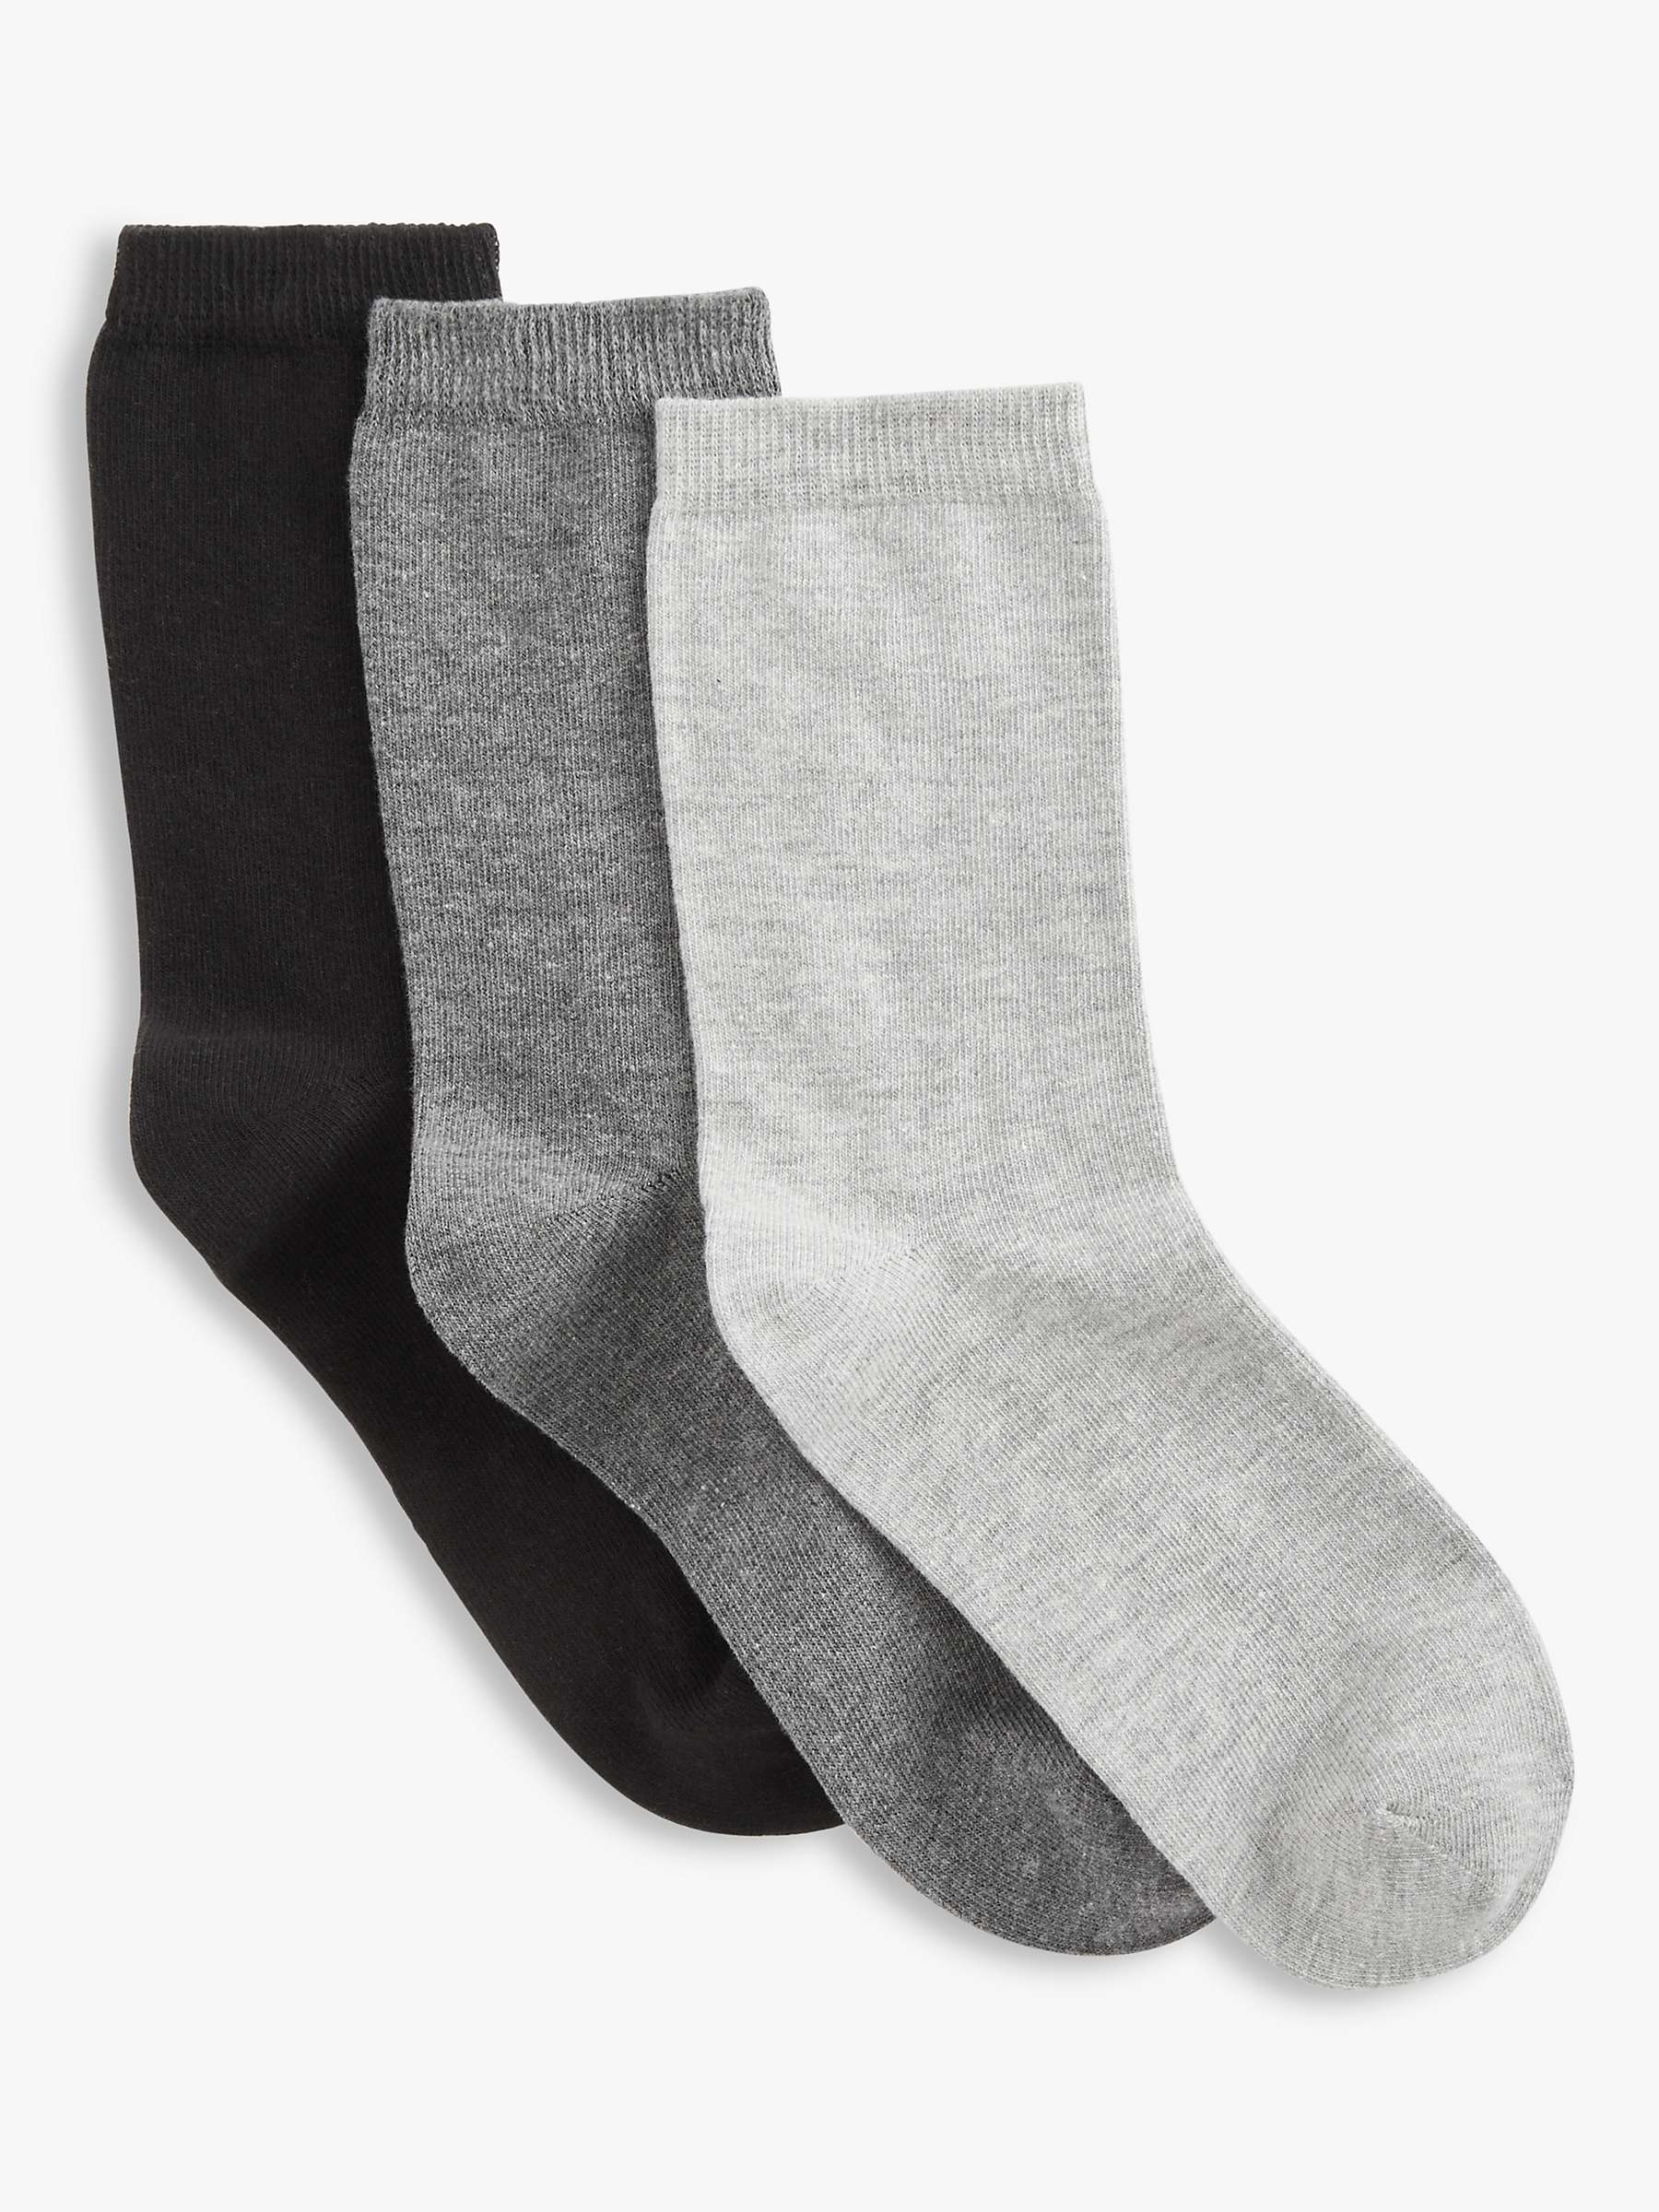 Buy John Lewis Ankle Socks, Pack of 3, Mono Online at johnlewis.com